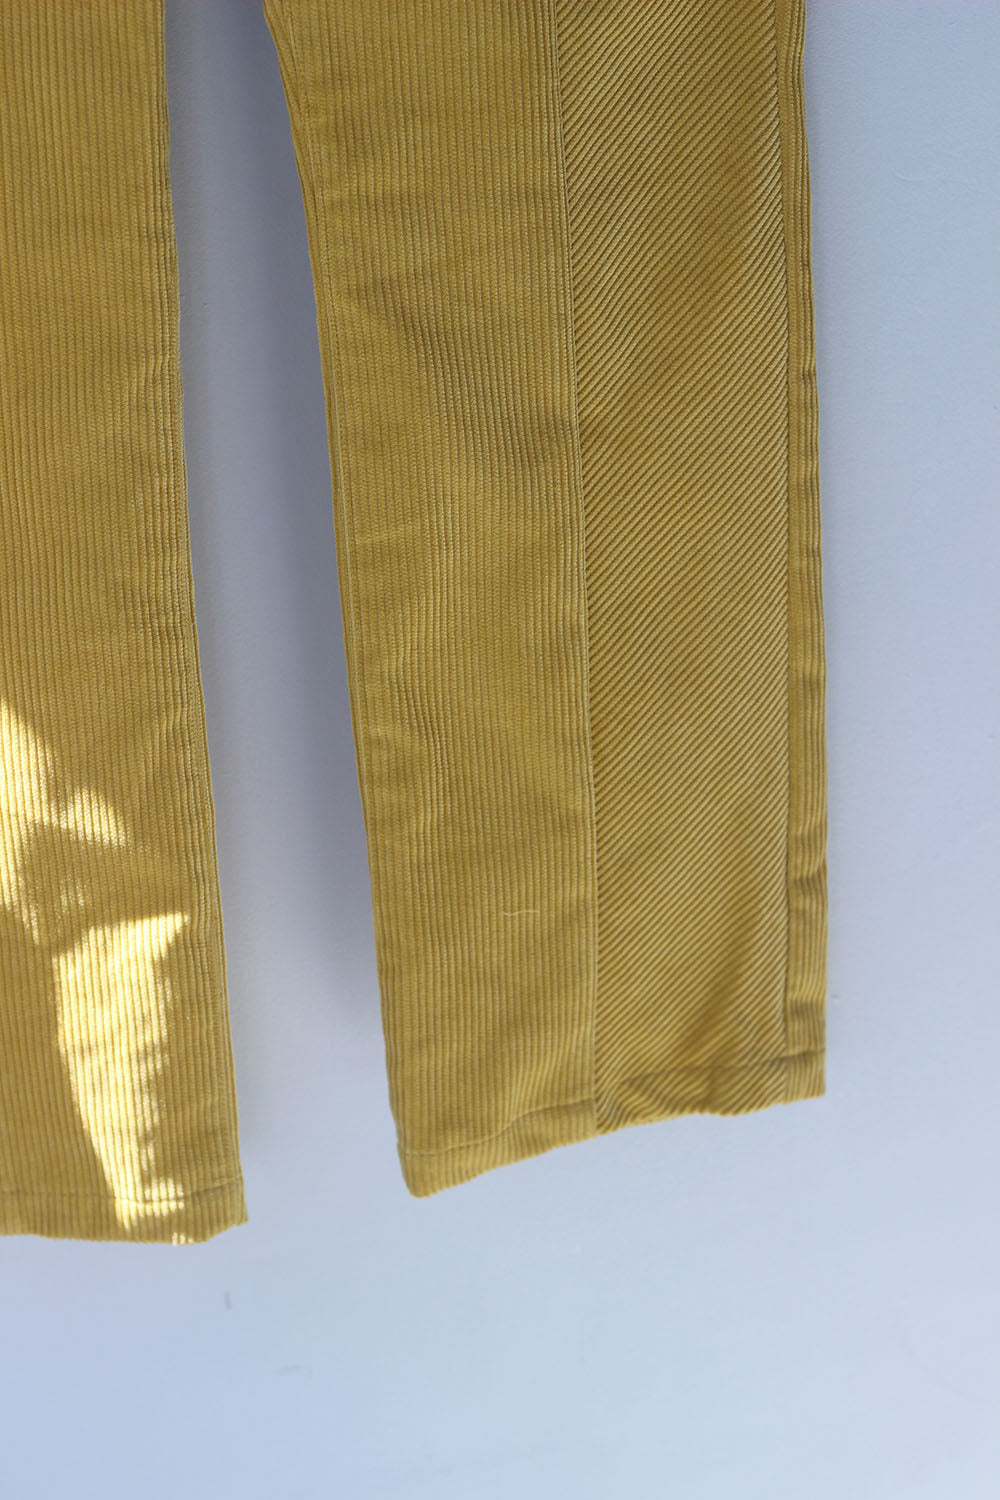 DOMENICO+SAVIO "corduroy pants" (yellow)